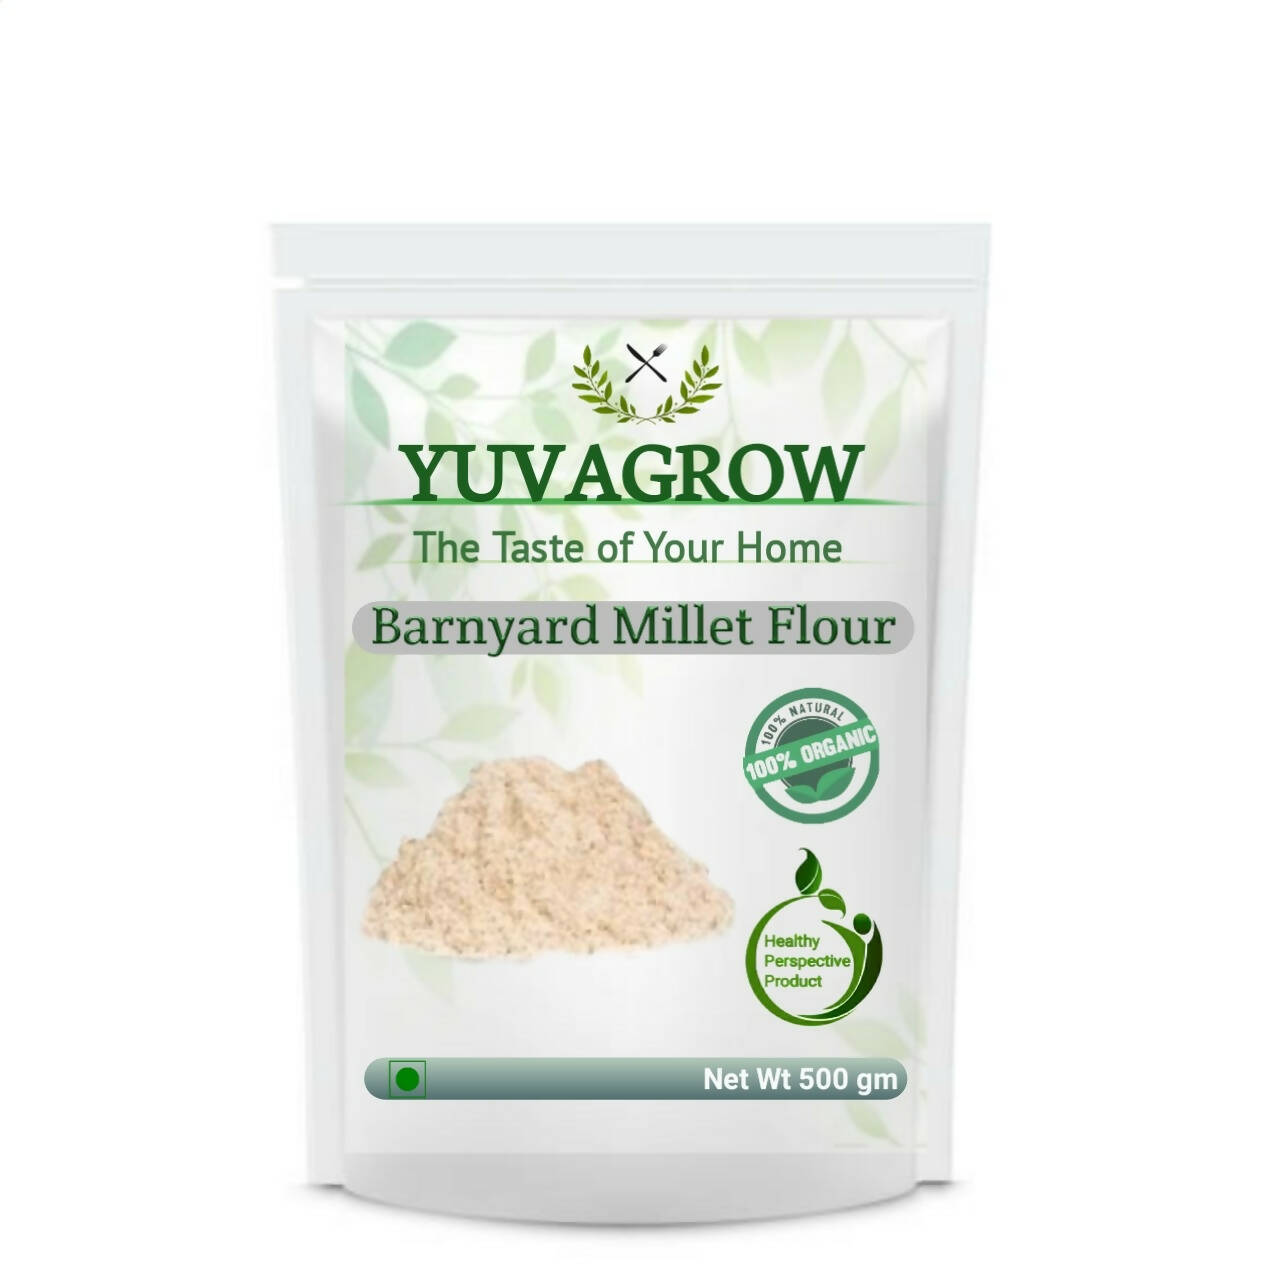 Yuvagrow Barnyard Millet Flour - buy in USA, Australia, Canada